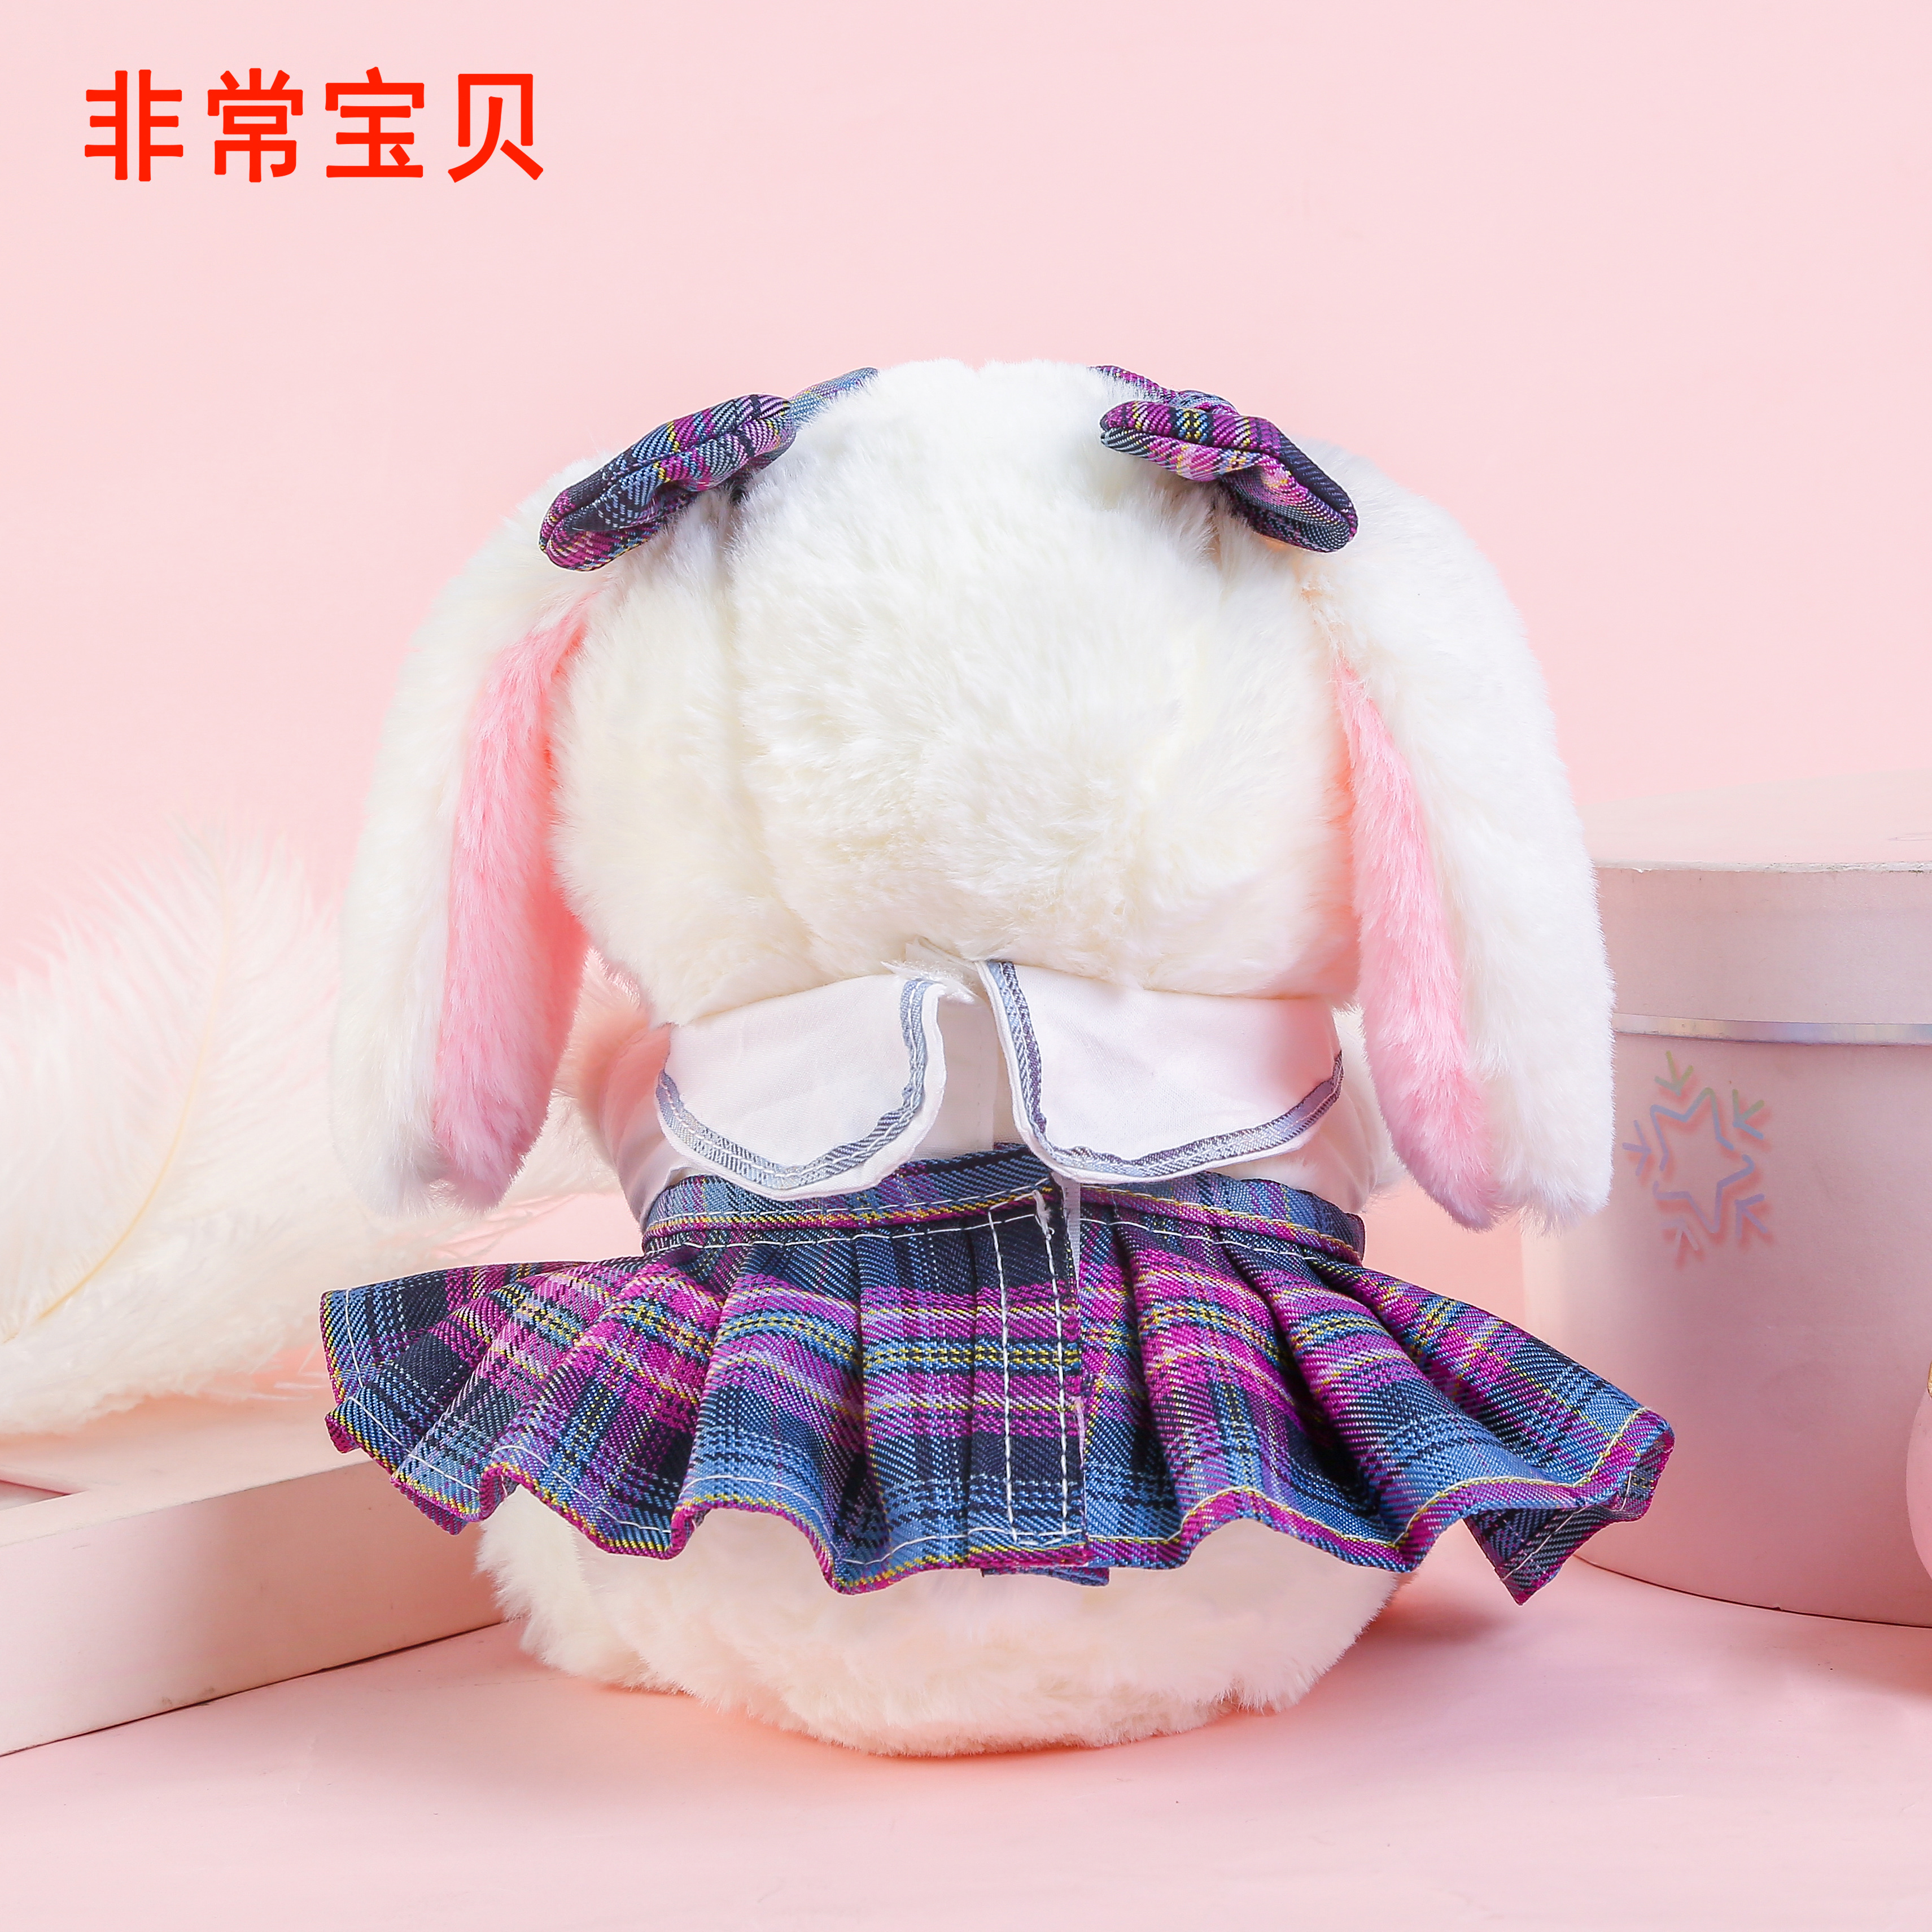 20cmjk紫色兔非常宝贝毛绒玩具布娃娃玩偶抱枕婚庆礼品生日礼物详情图3